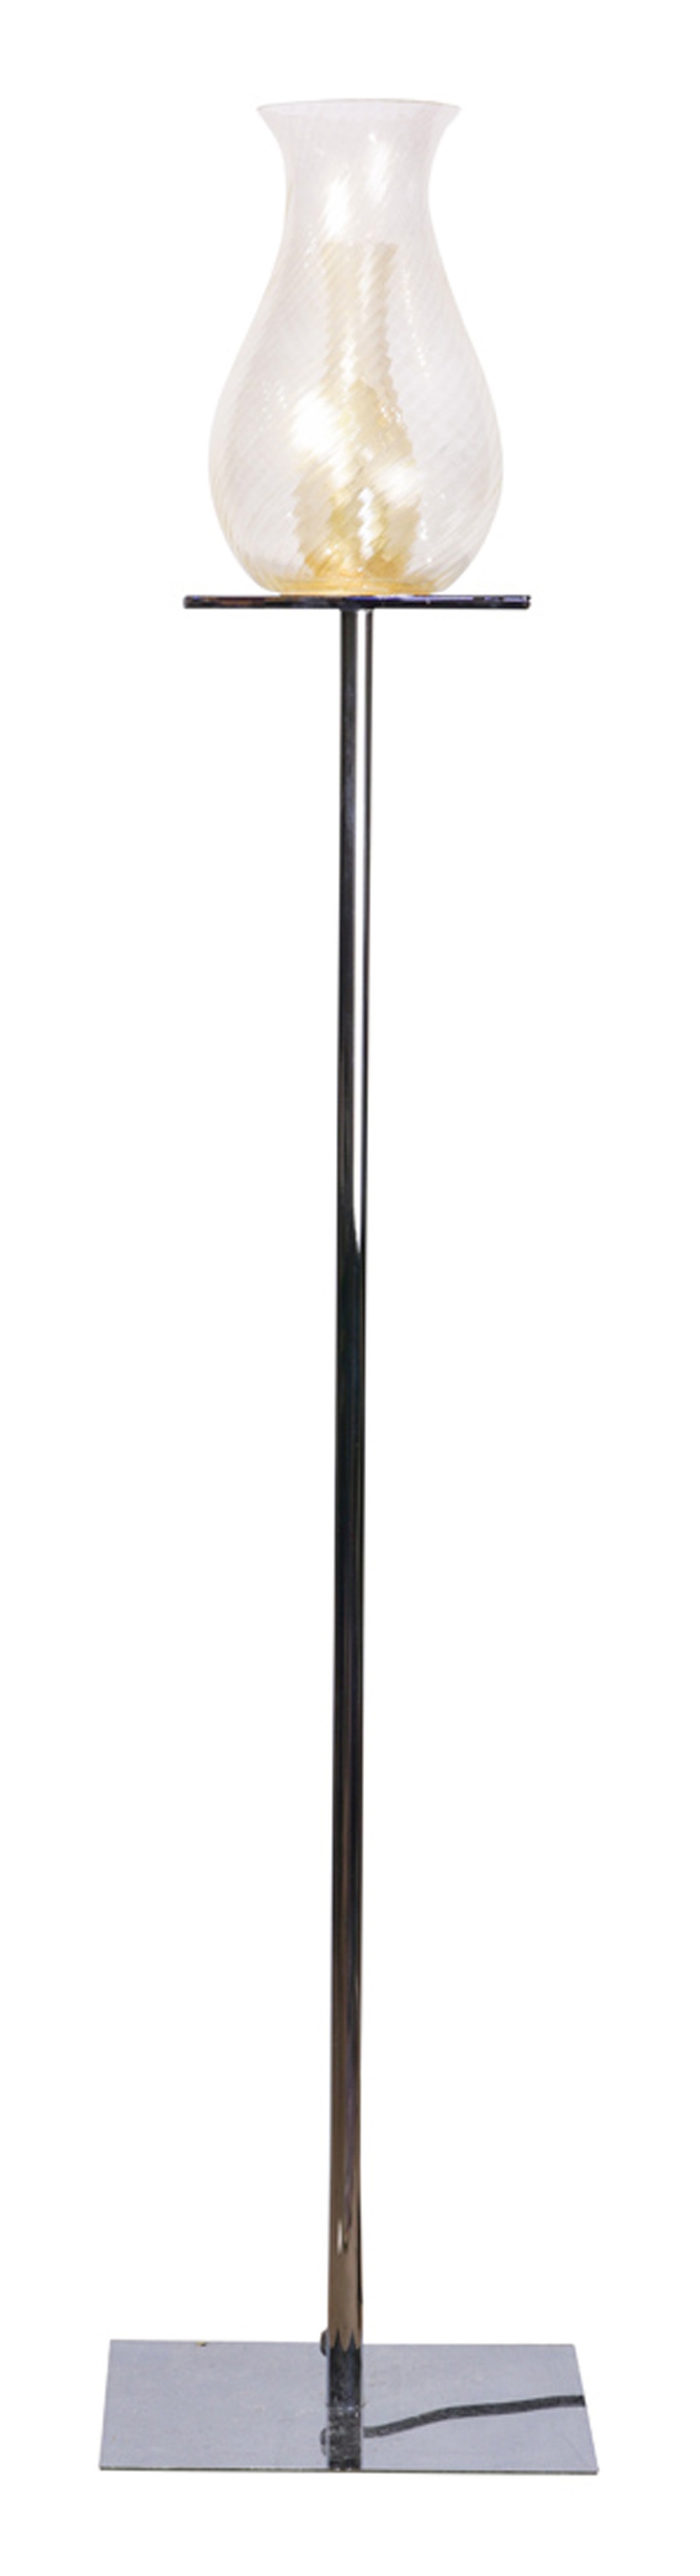 A Philippe Starck custom floor lamp by Philippe Starck, circa 2000